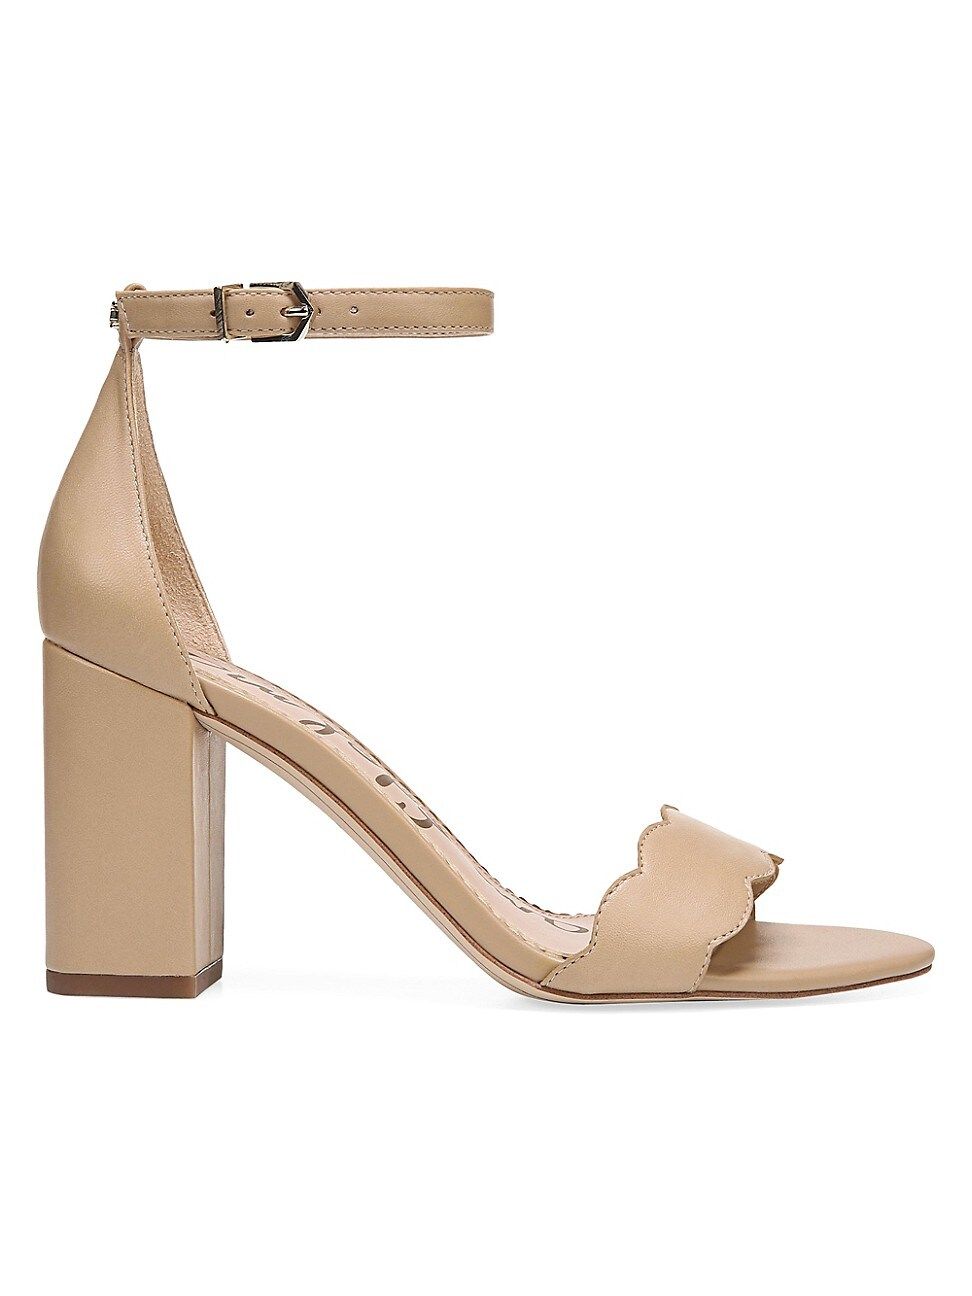 Sam Edelman Women's Odila Scallop Leather Sandals - Classic Nude - Size 5.5 | Saks Fifth Avenue